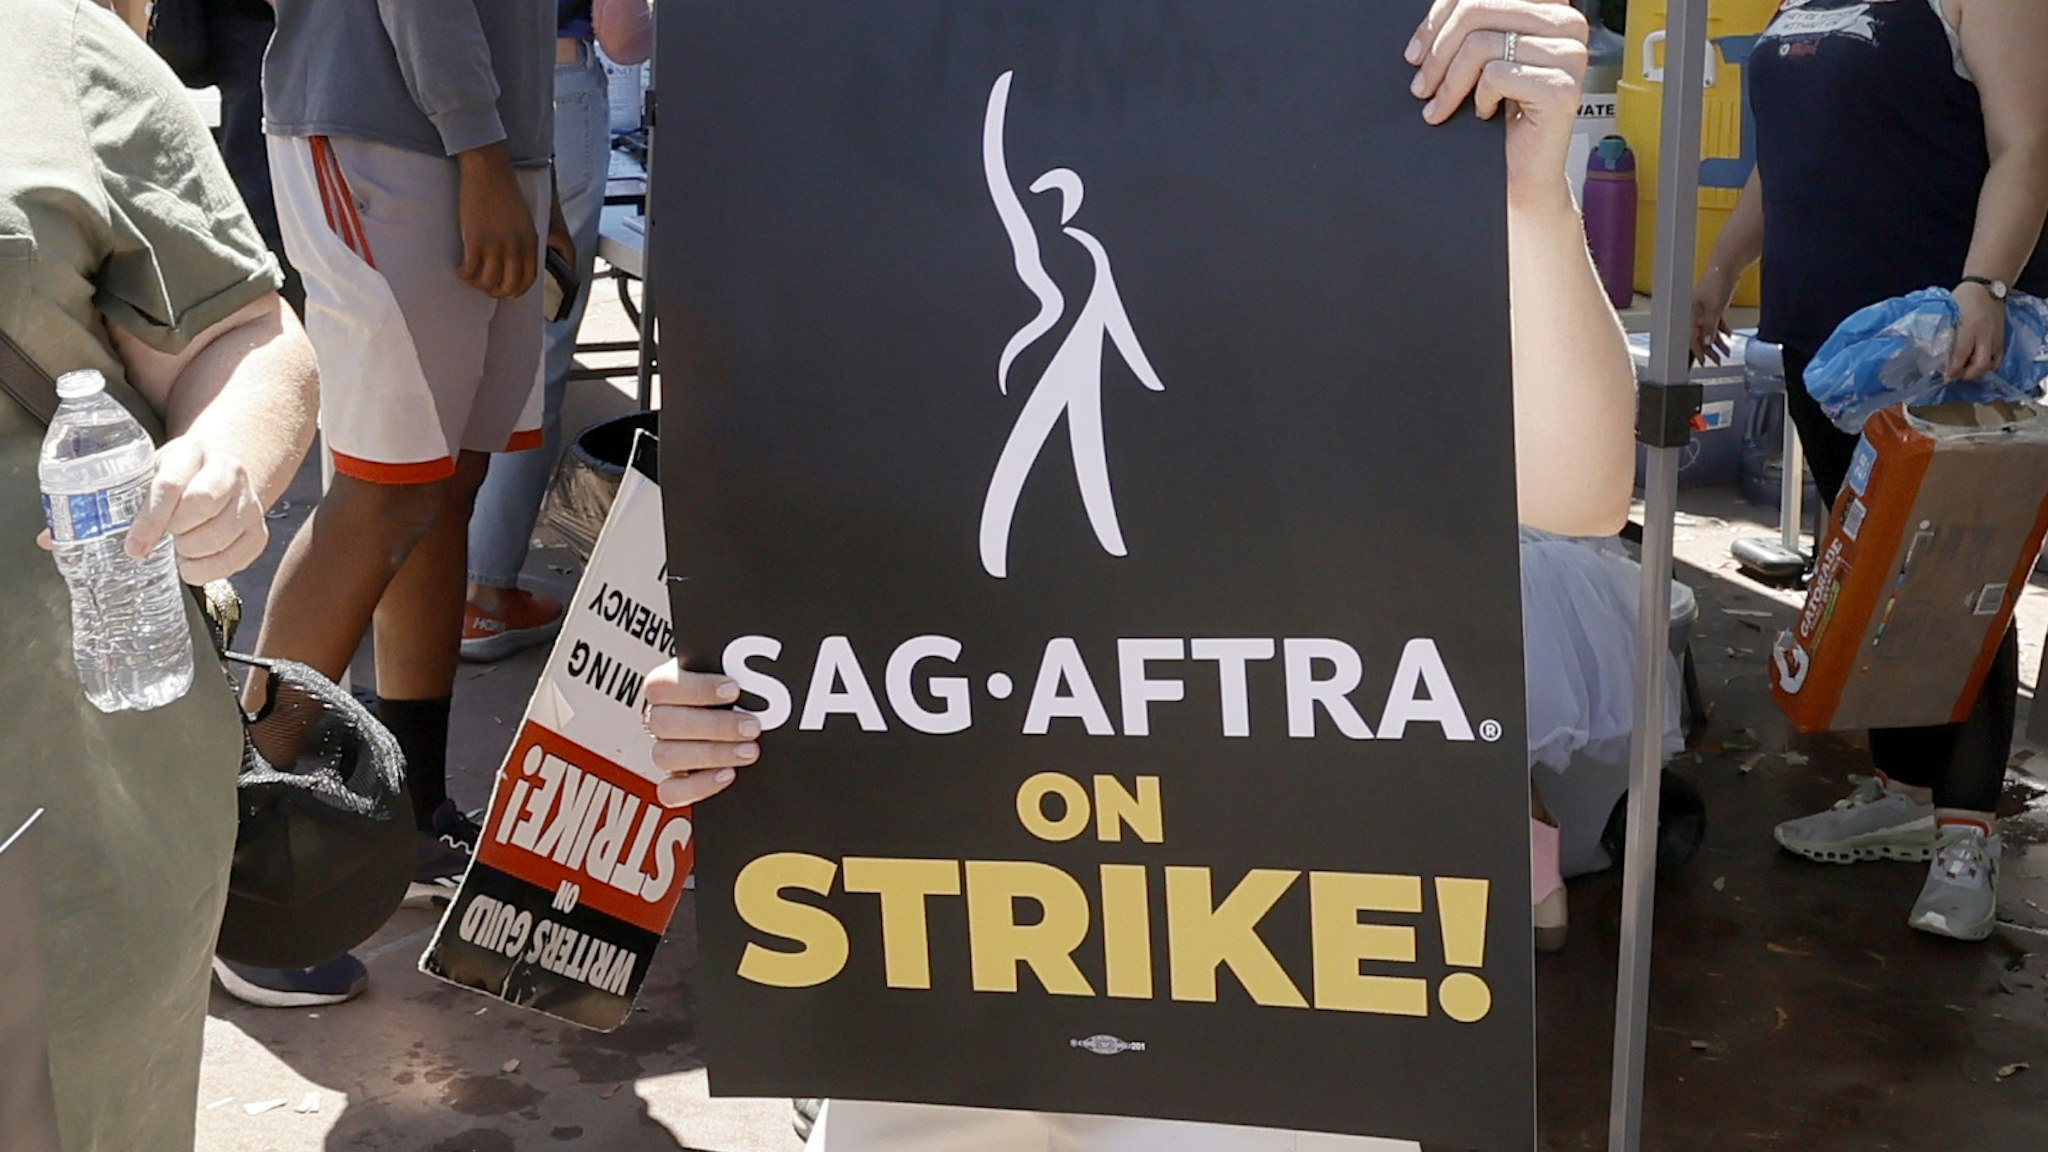 Actress Mandy Moore during SAG-AFTRA strike